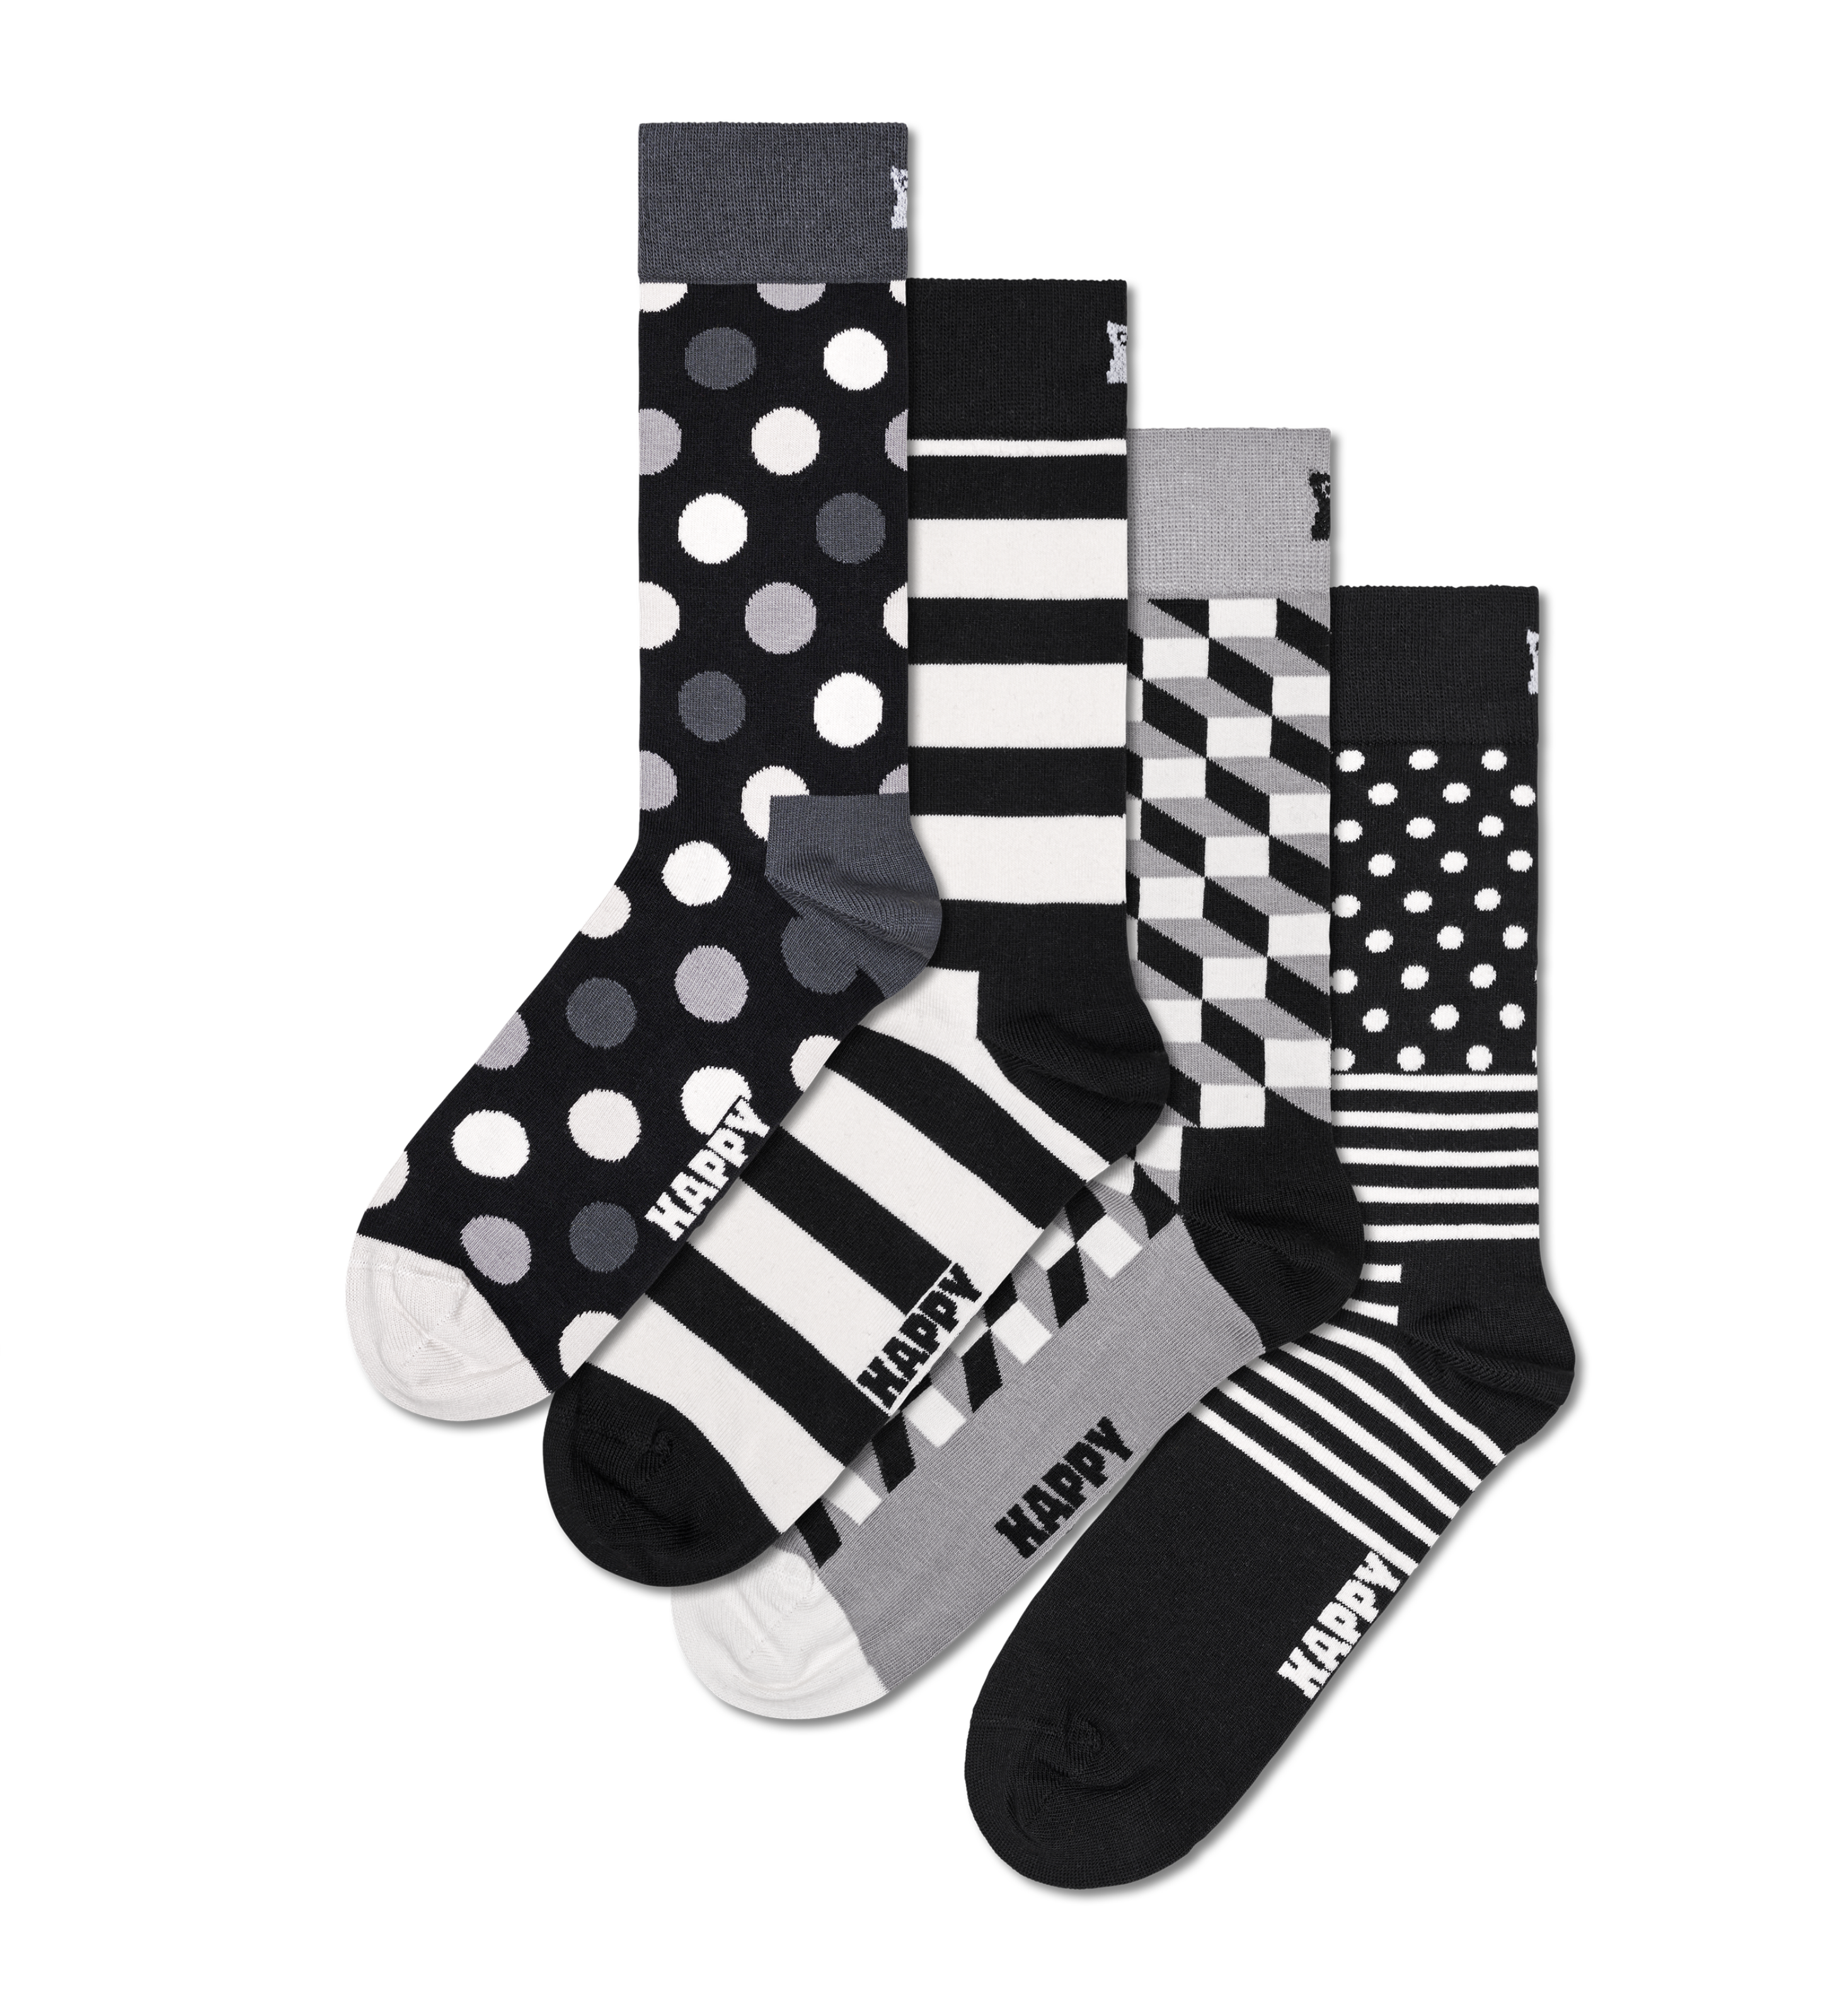 US White Black | & Socks Crew Balck 4-Pack Socks Set Gift Happy Classic